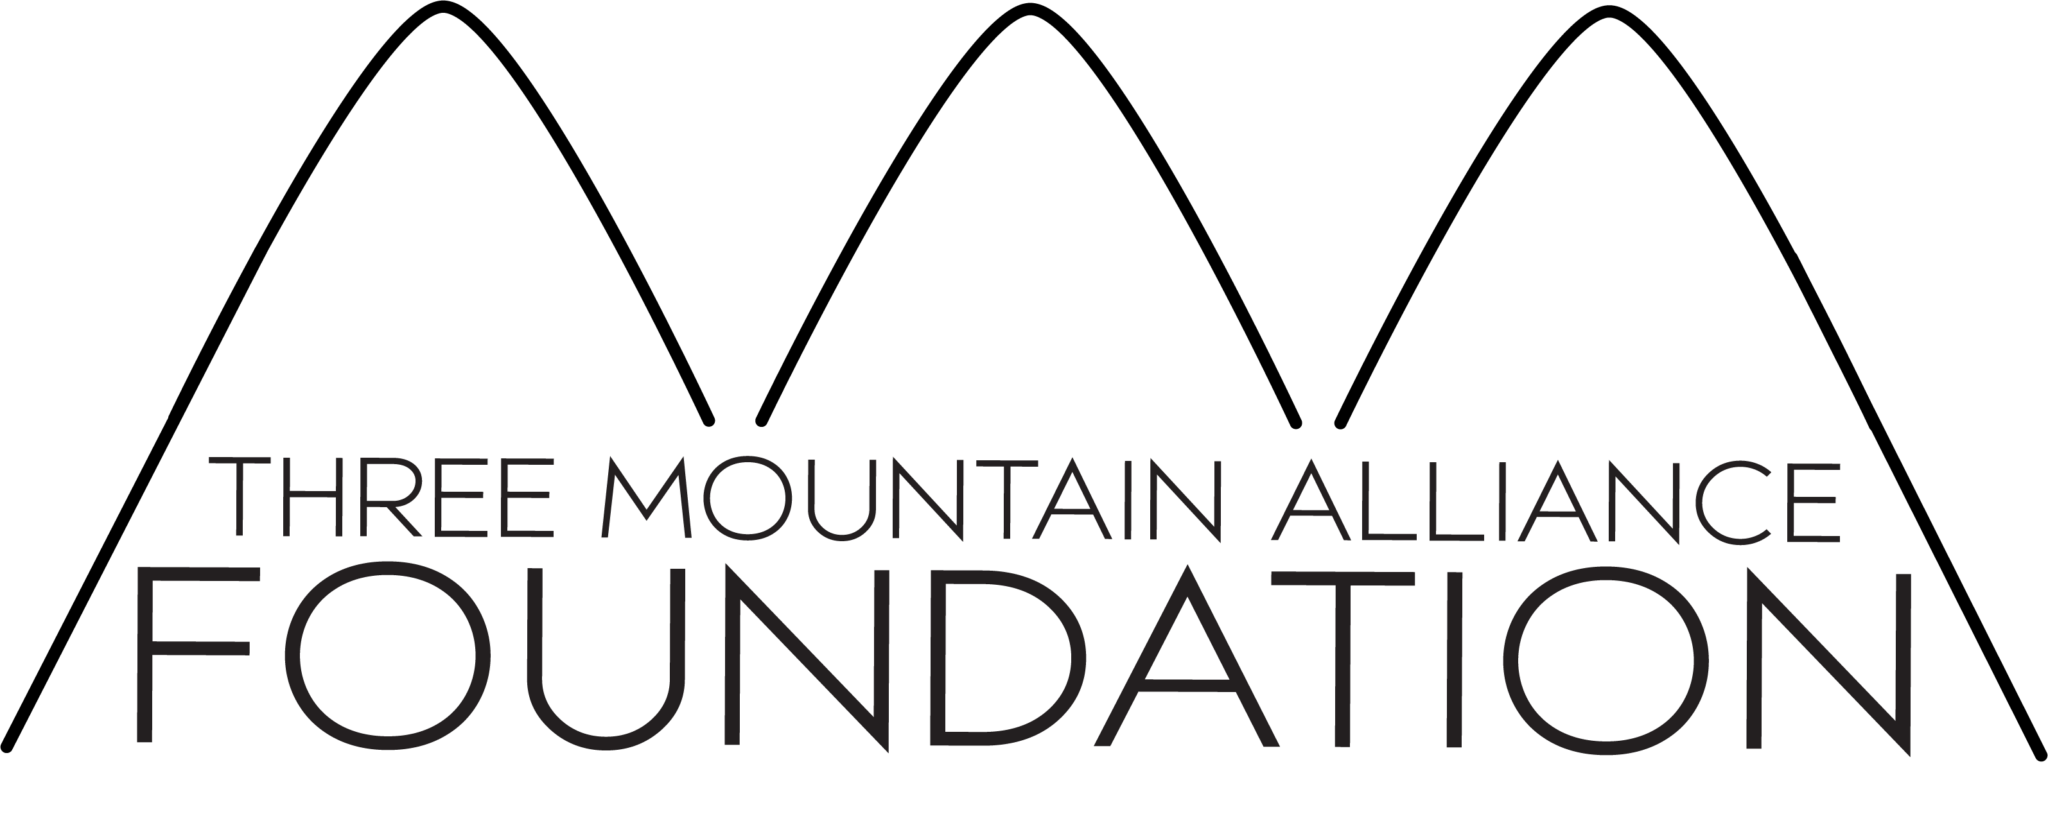 About Three Mountain Alliance - Three Mountain Alliance